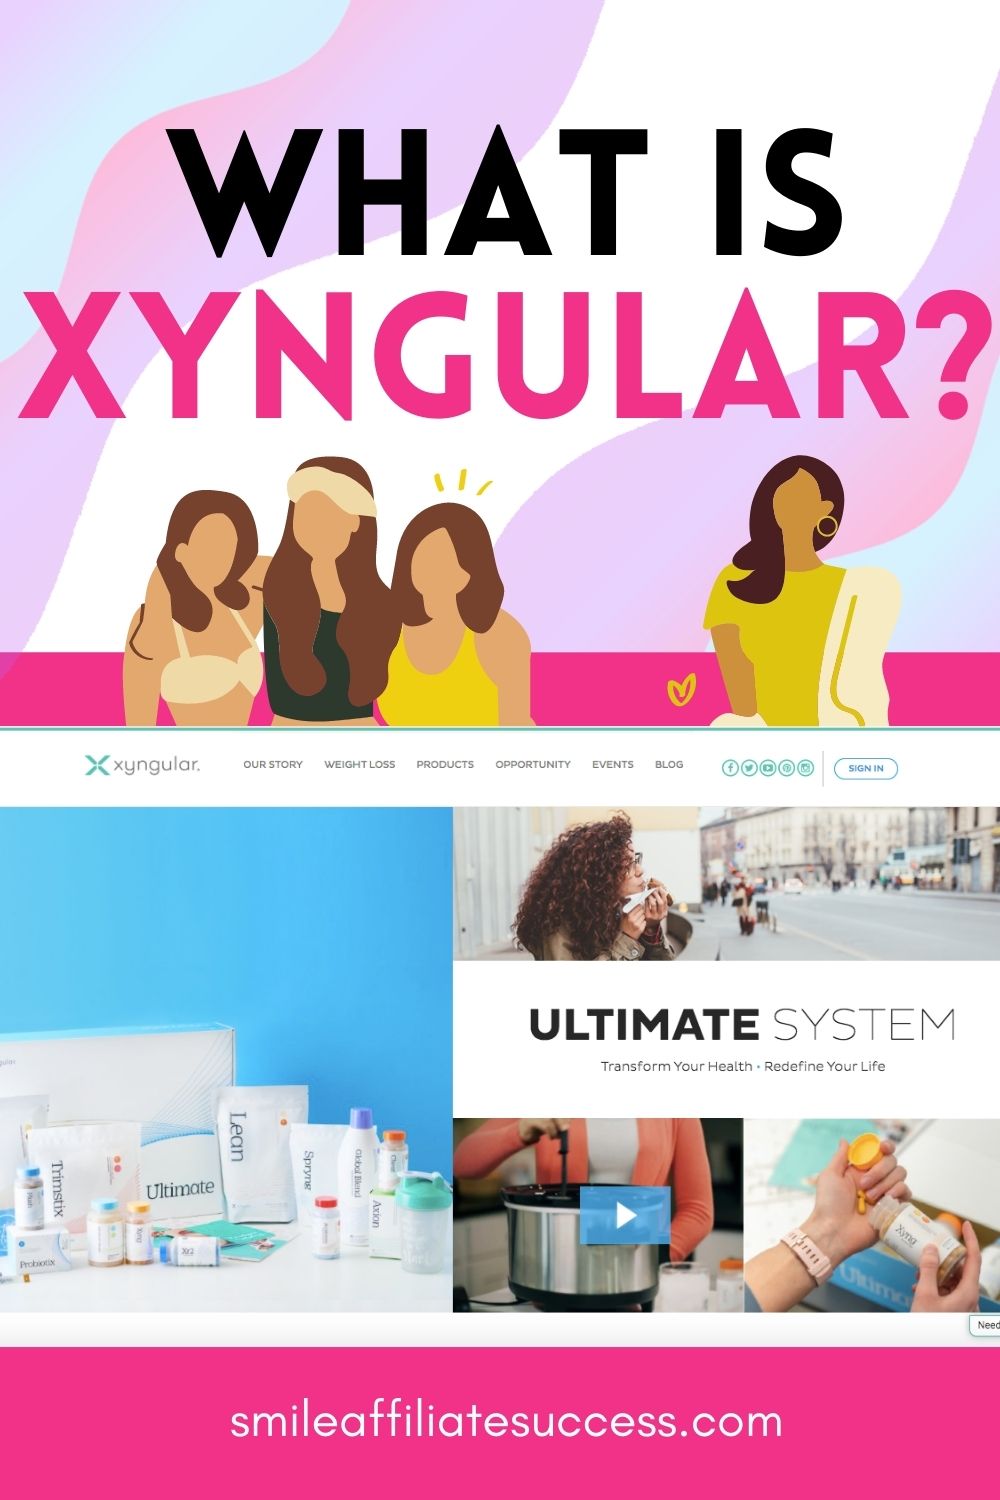 What Is Xyngular?